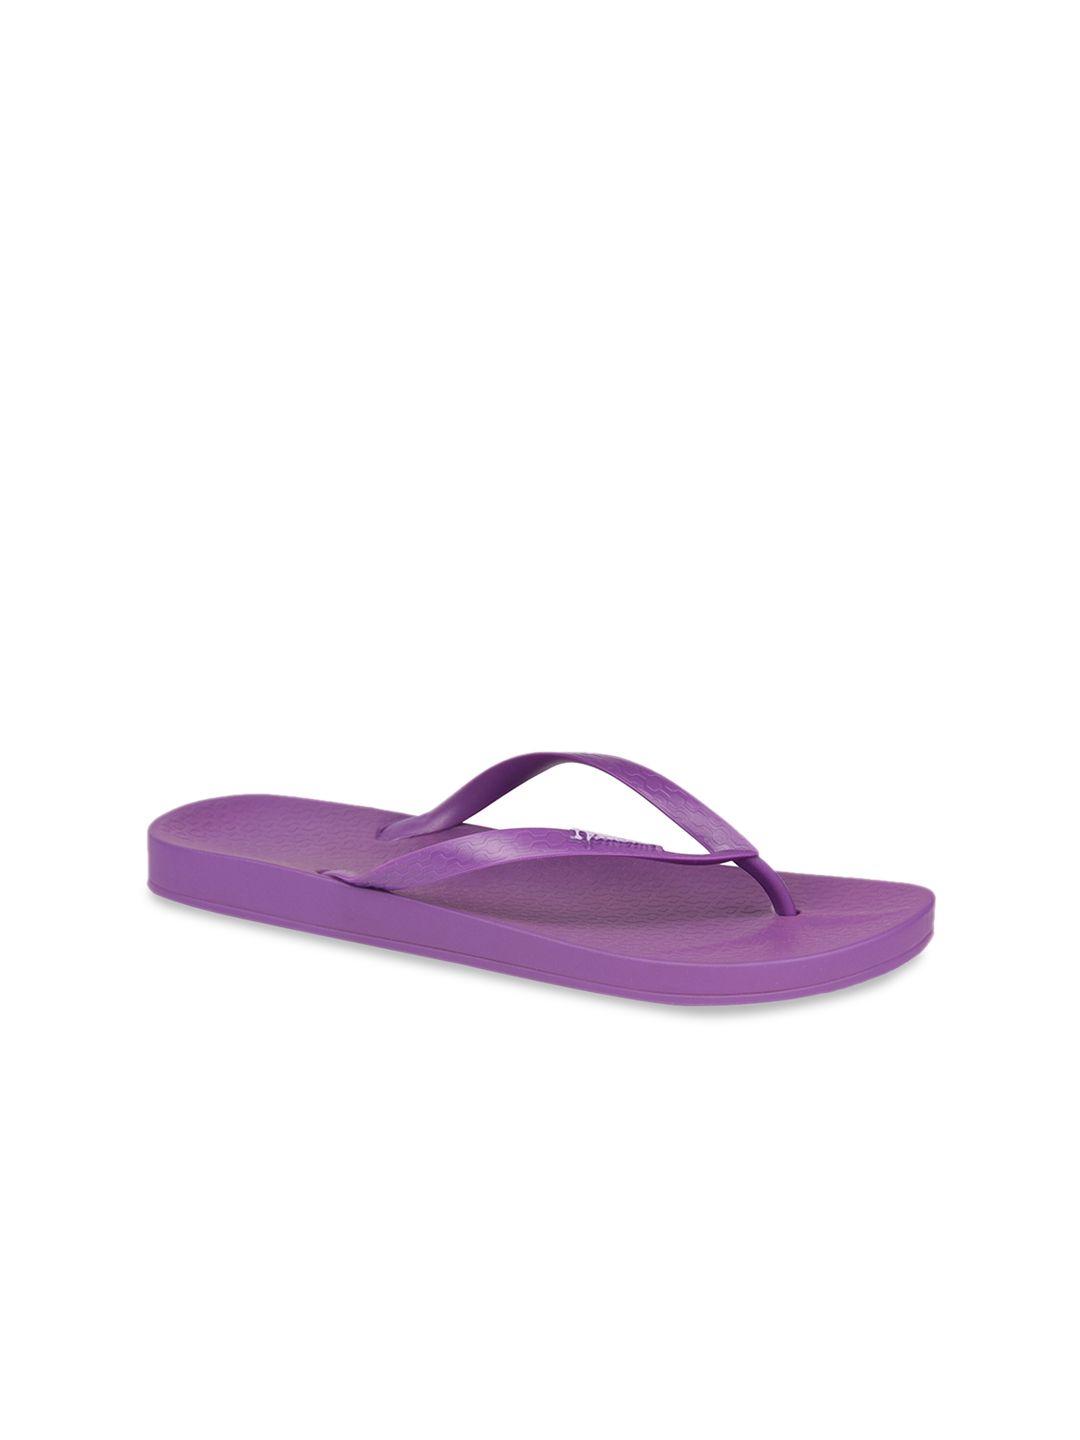 ipanema women purple solid thong flip-flops